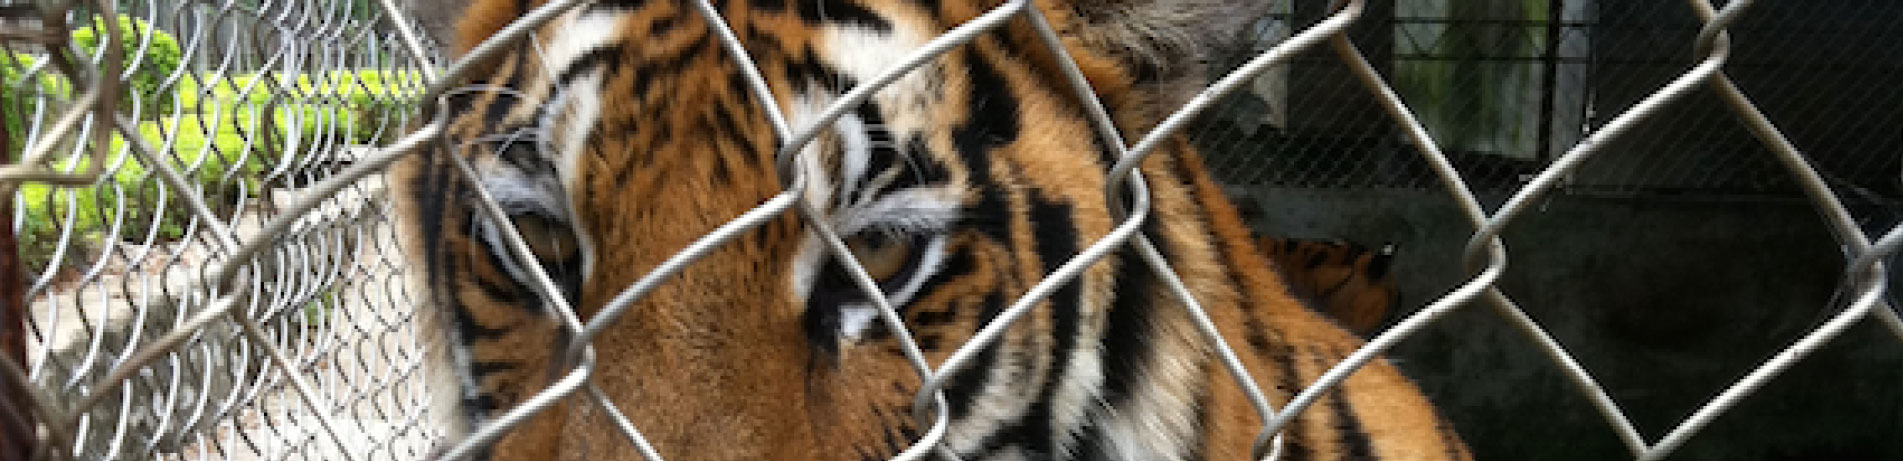 Captive tiger behind fence, China